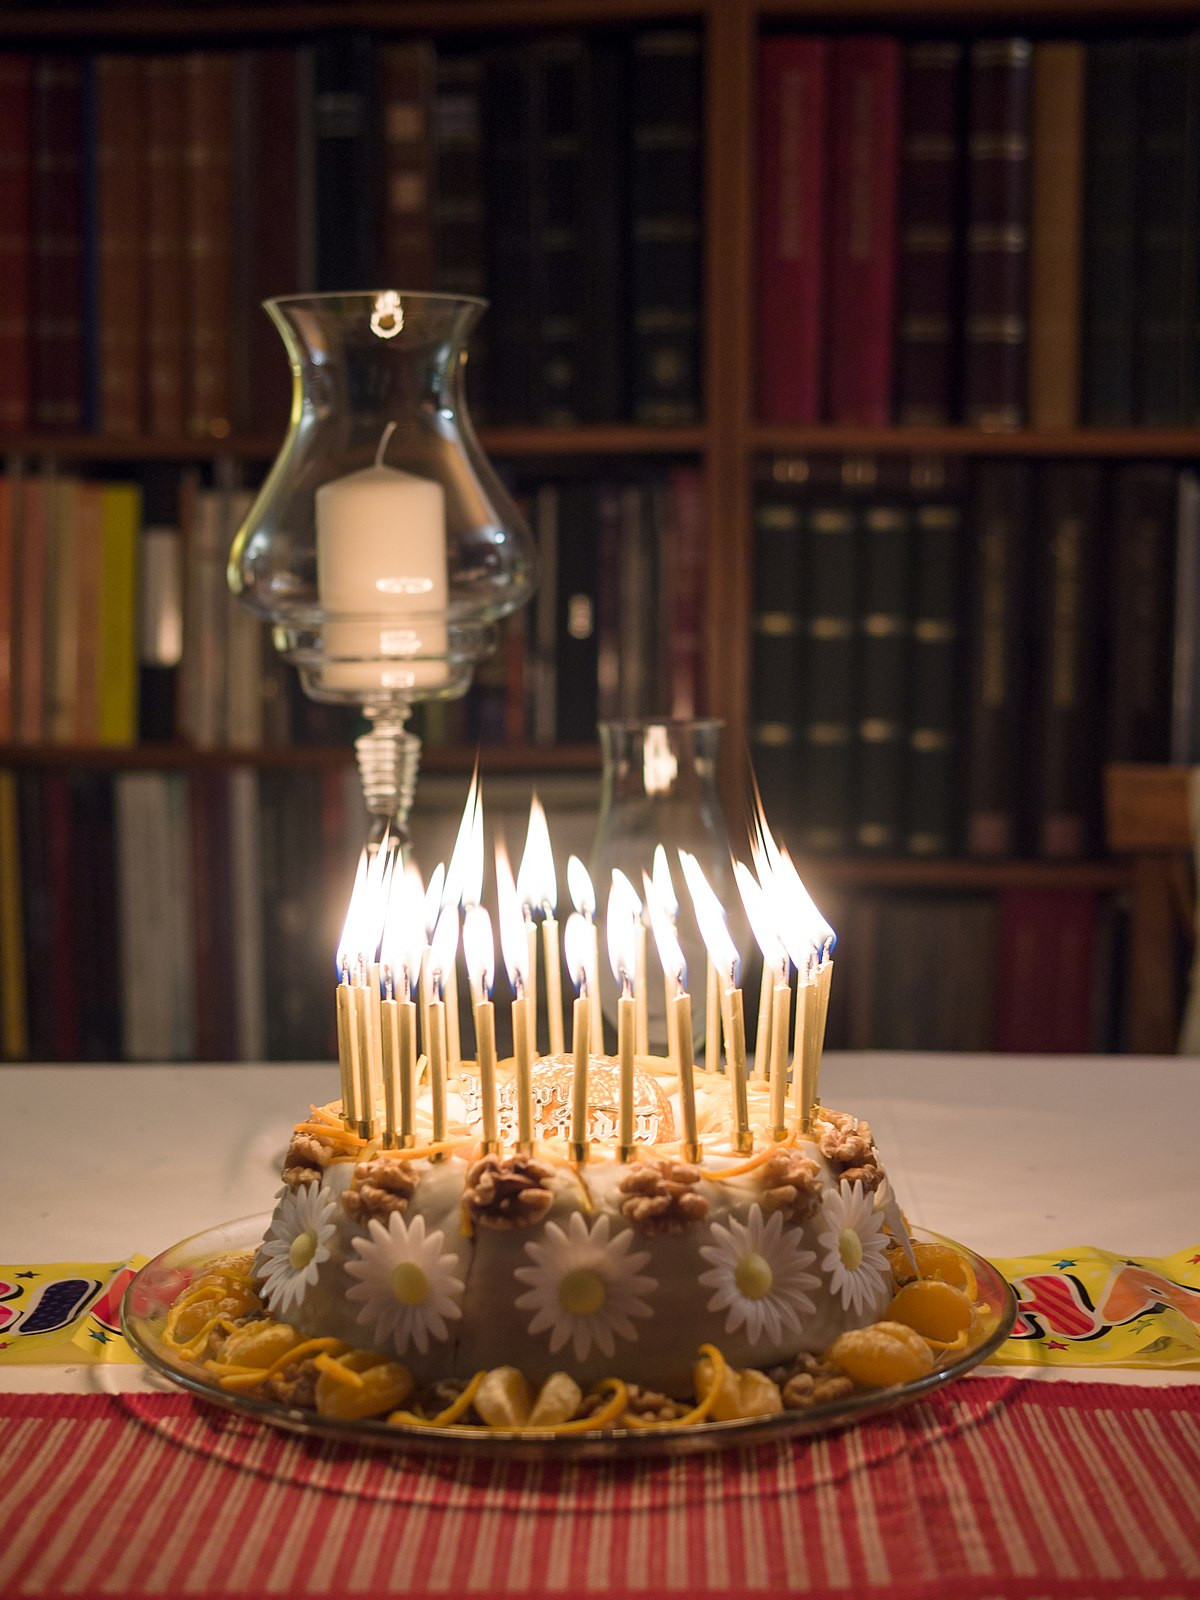 Image Of Birthday Cake
 Birthday cake